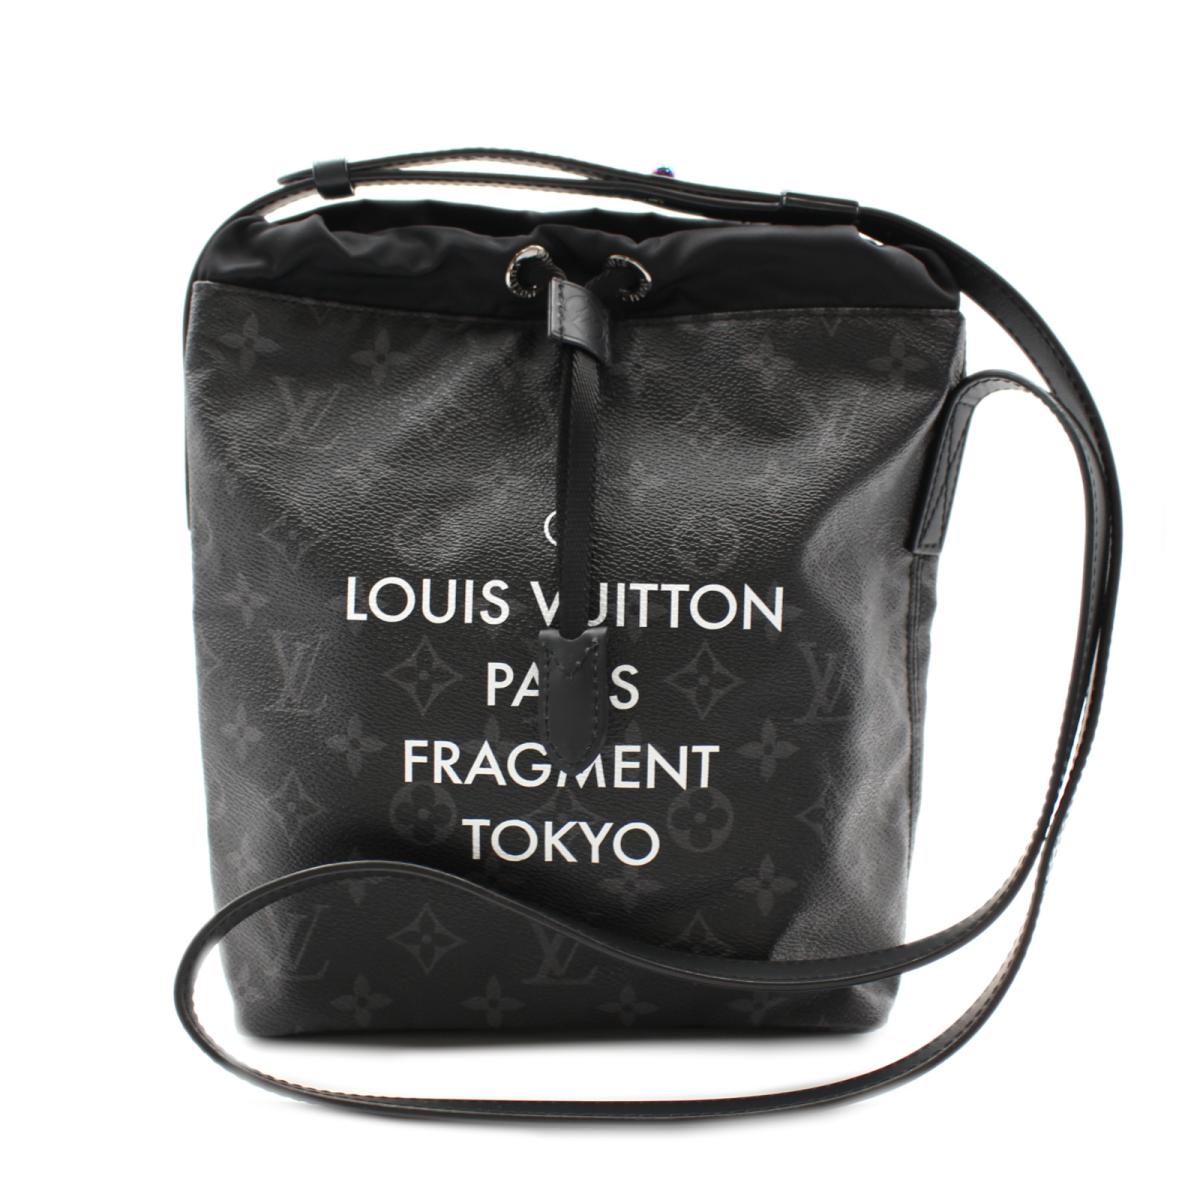 LOUIS VUITTON Monogram Eclipse Fragment Nano Bag Shoulder Bag